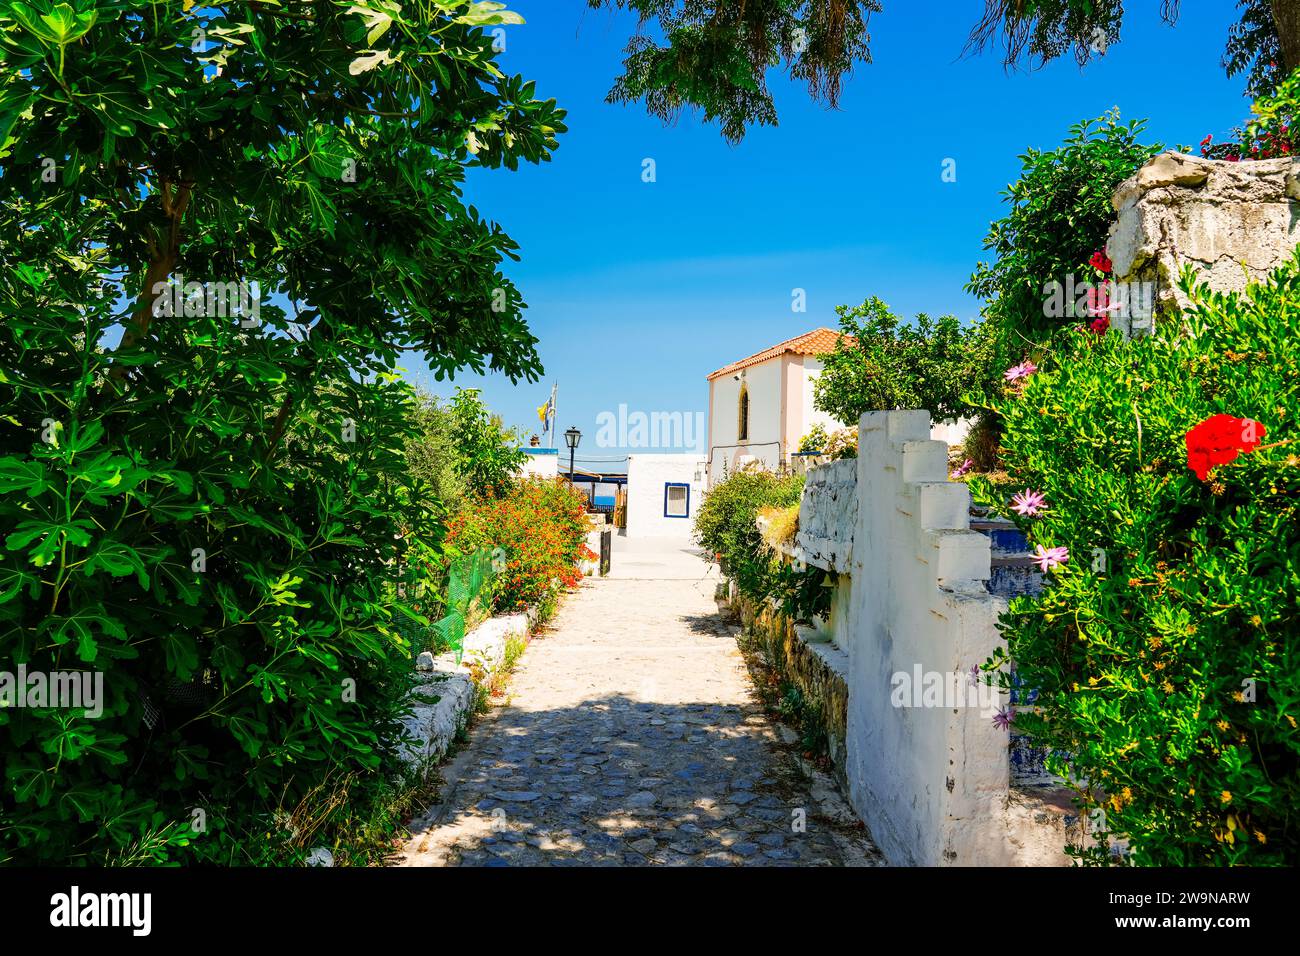 Street in the idyllic Mediterranean town of Zia on the Greek island of Kos. Stock Photo